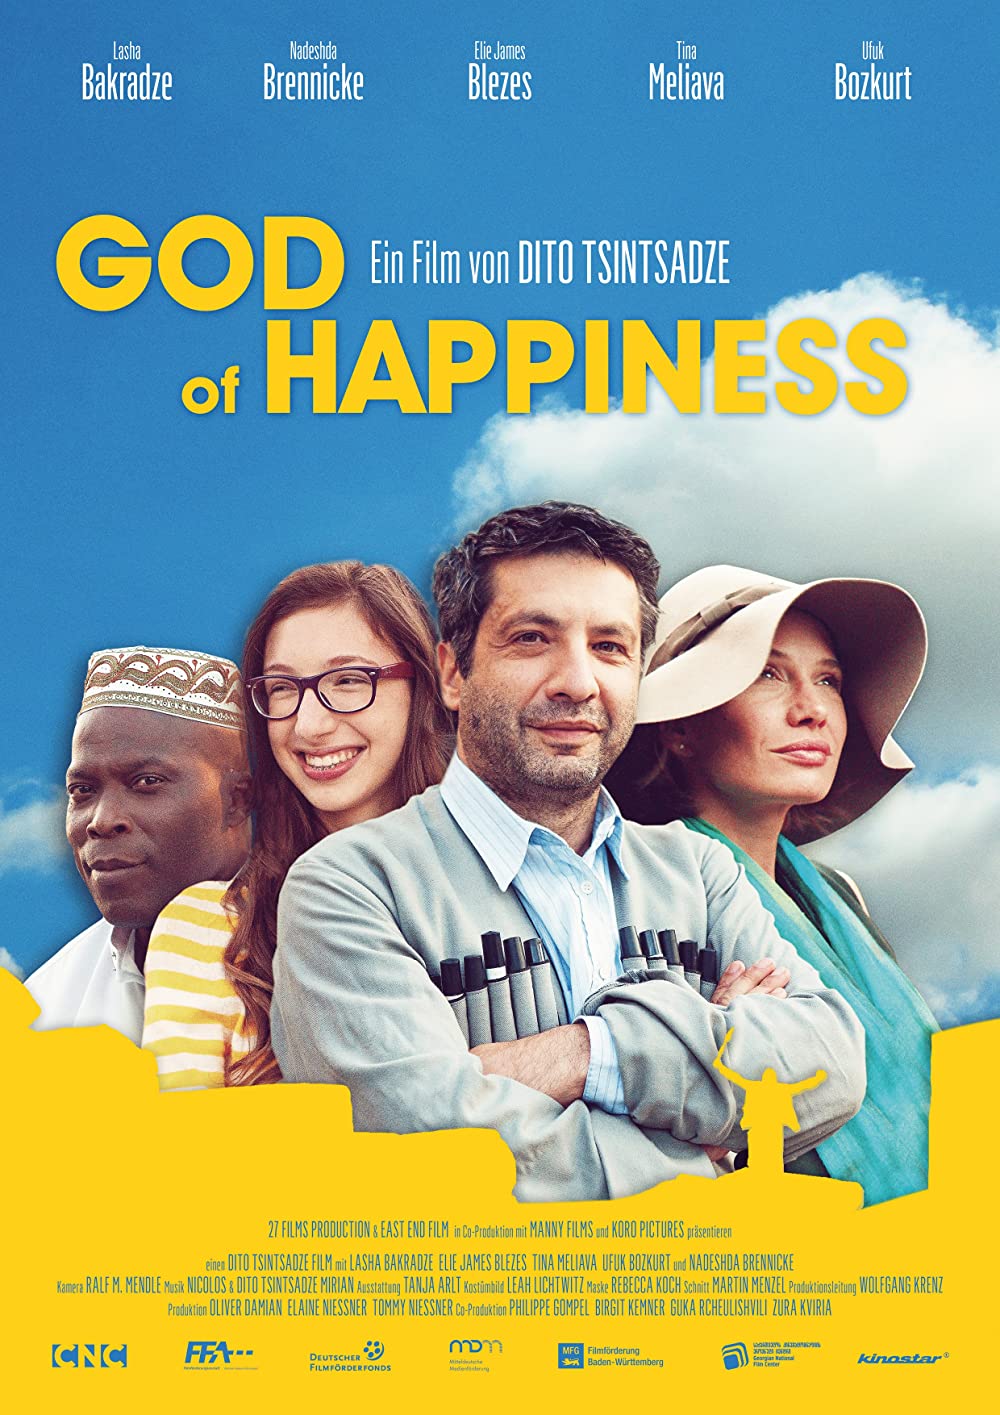 Filmbeschreibung zu God of Happiness